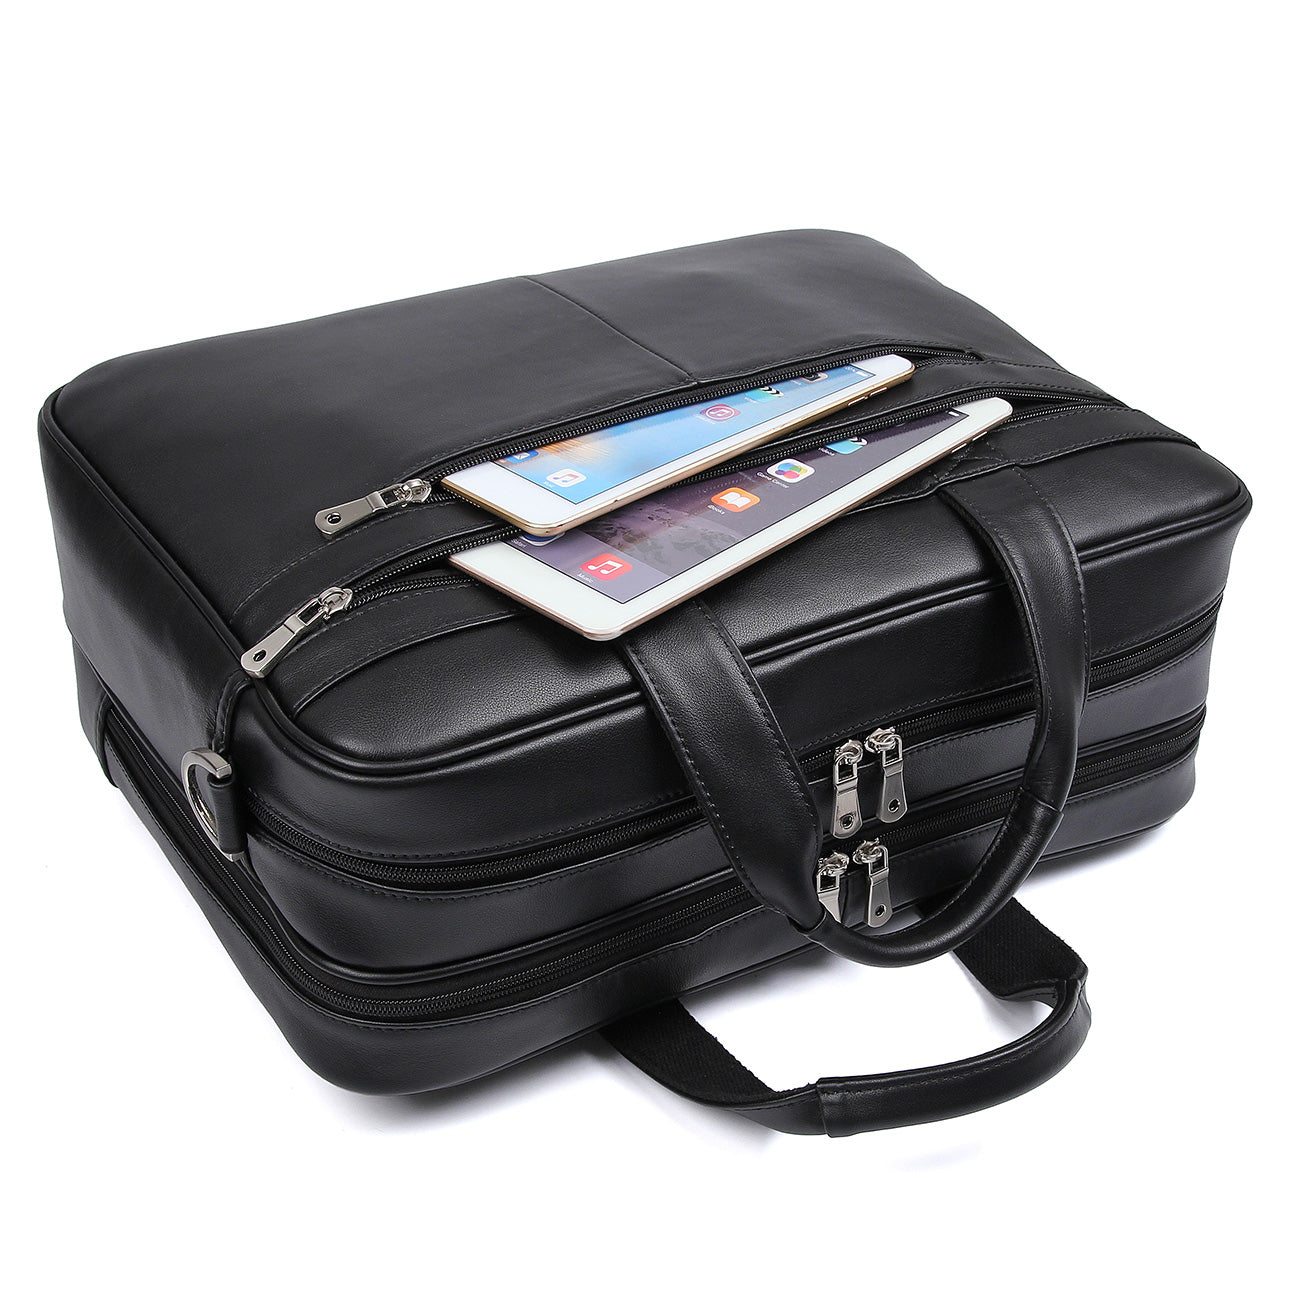 Fashion Black Leather 12 inches Vertical Briefcase Work Shoulder Bag B